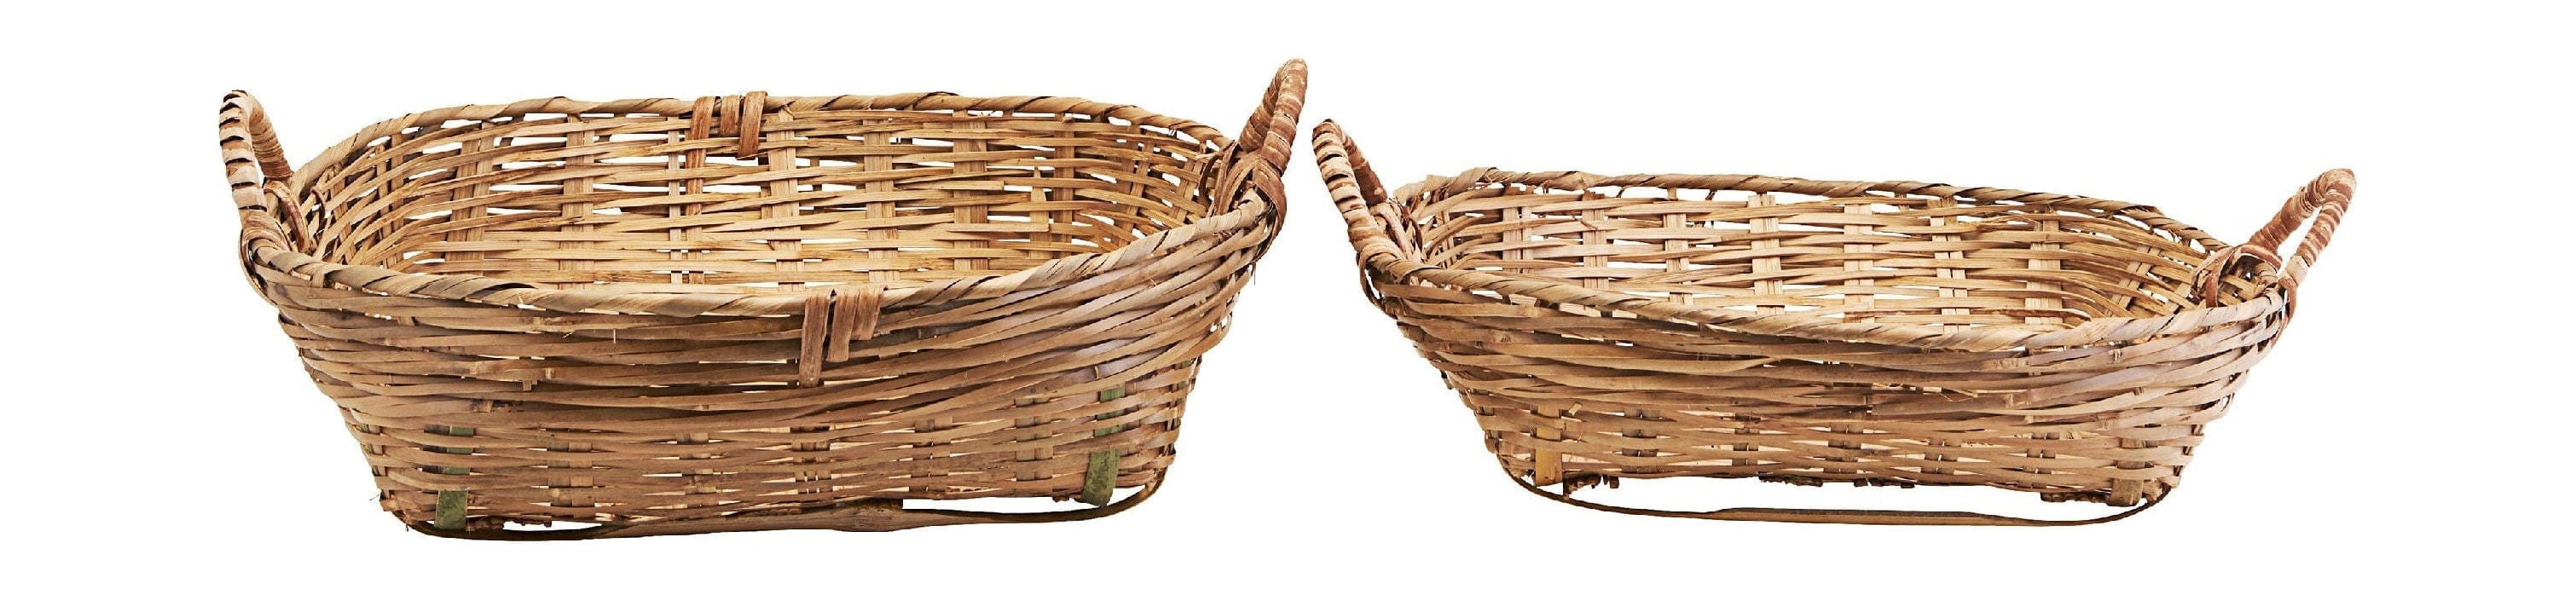 Meraki Tradition Storage Basket Made Of Bamboo Set Of 2, øx H 50x18 & 45x14 Cm